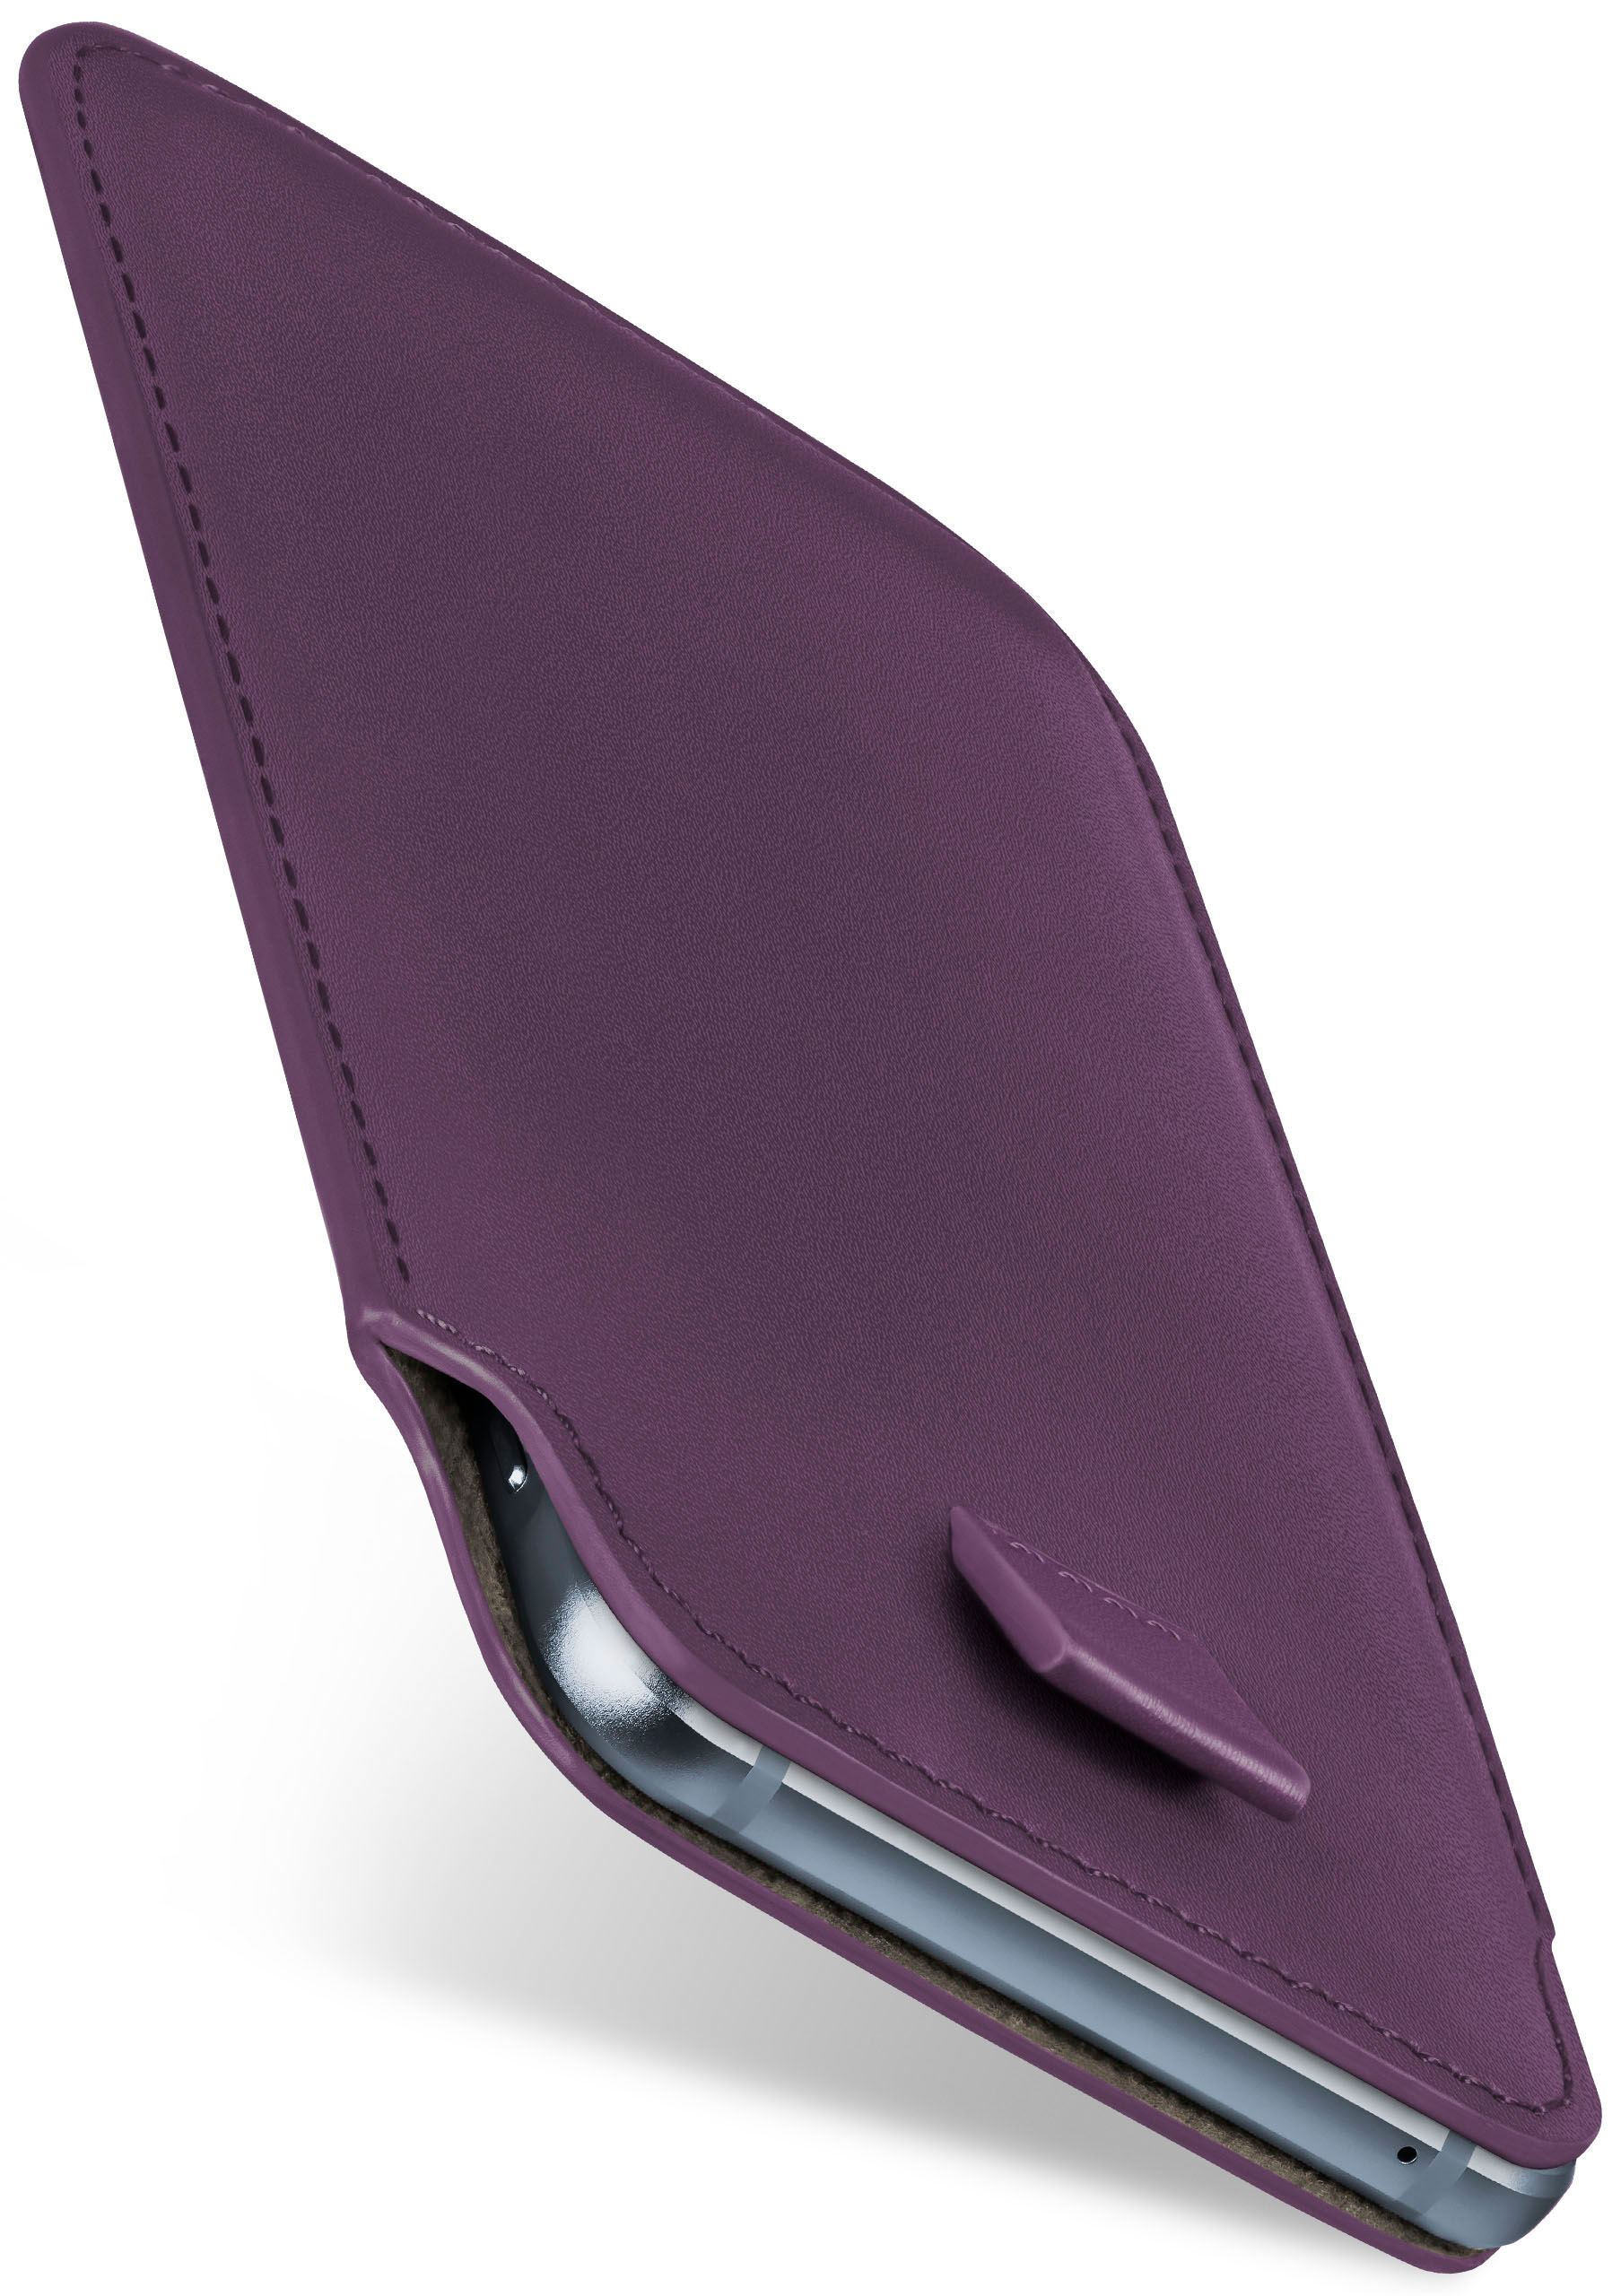 MOEX Slide Case, Full Cover, ThinQ Fit, Indigo-Violet G7 / G7 LG